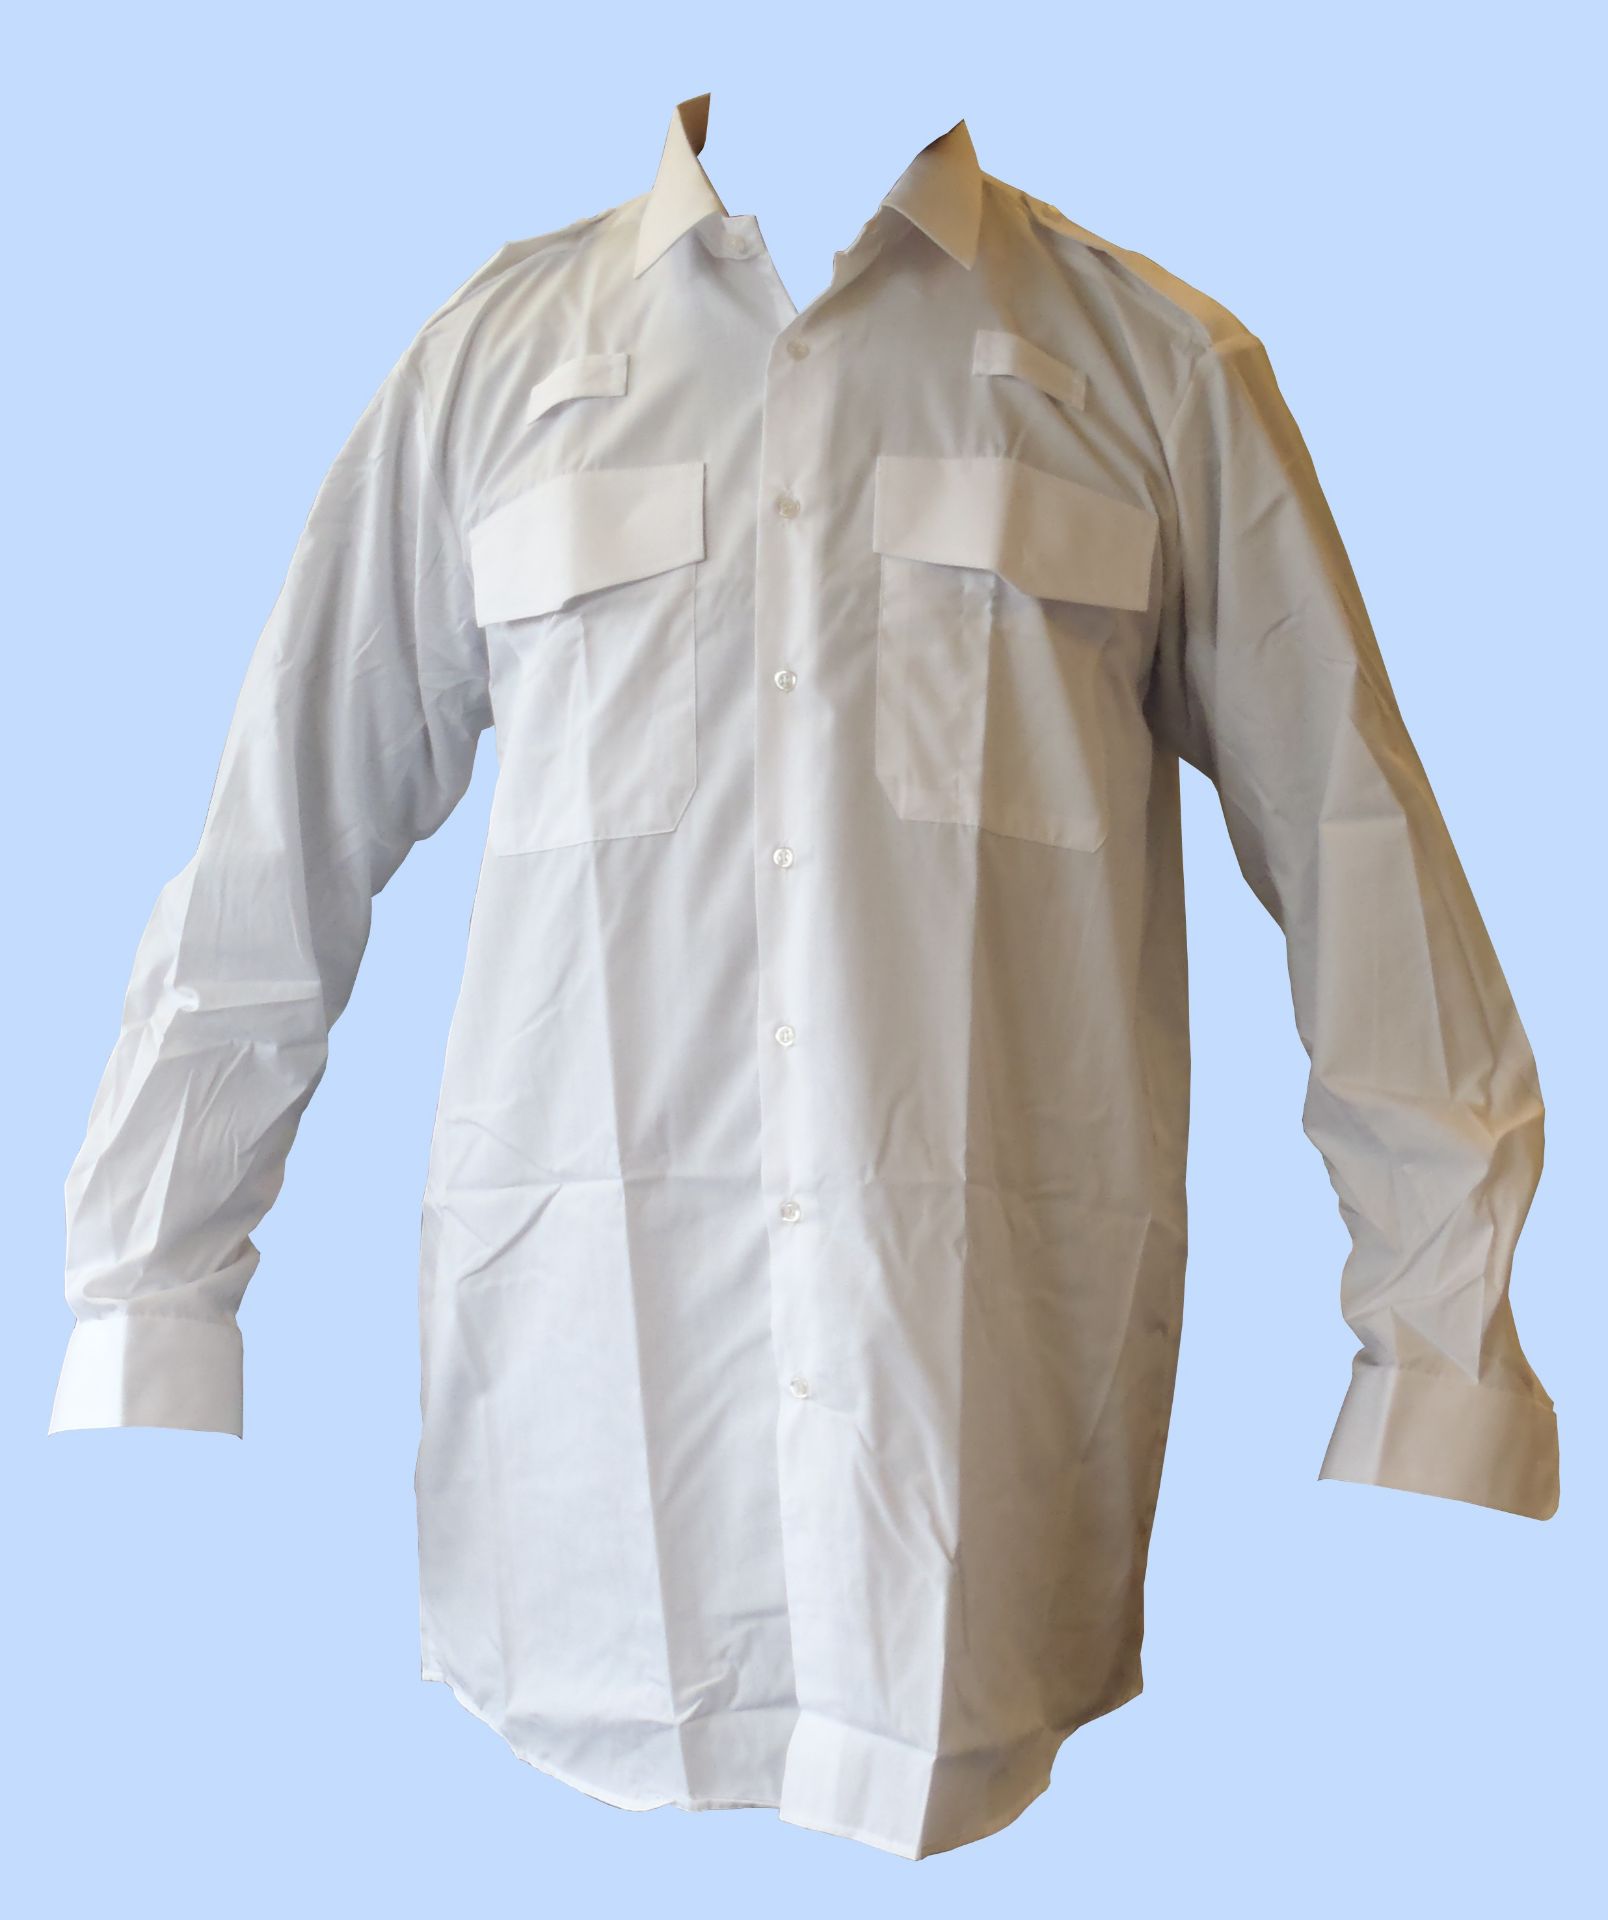 Pack of 10 - White Female Shirts - Brand New